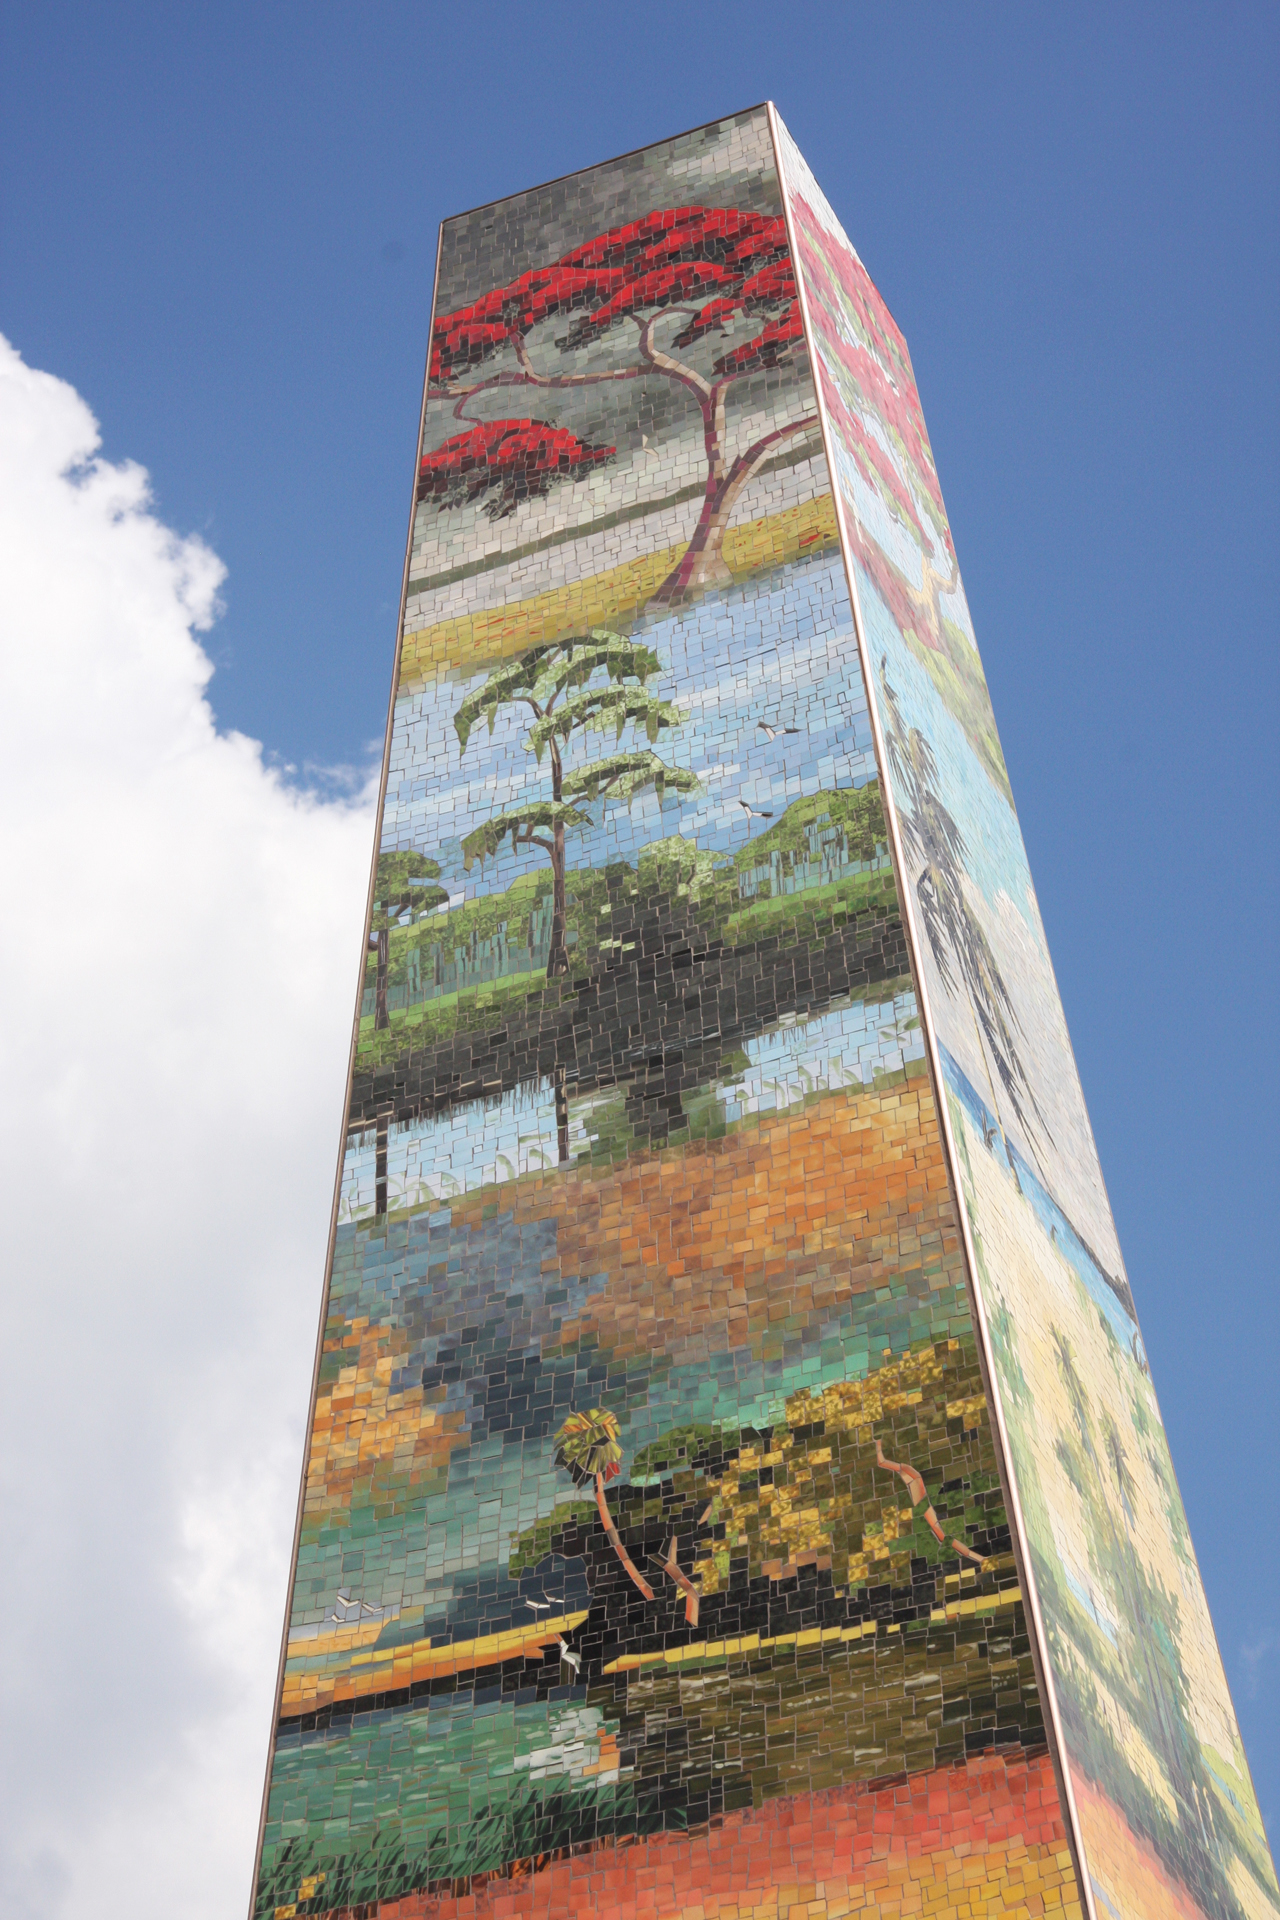 The Florida Highwaymen Obelisk